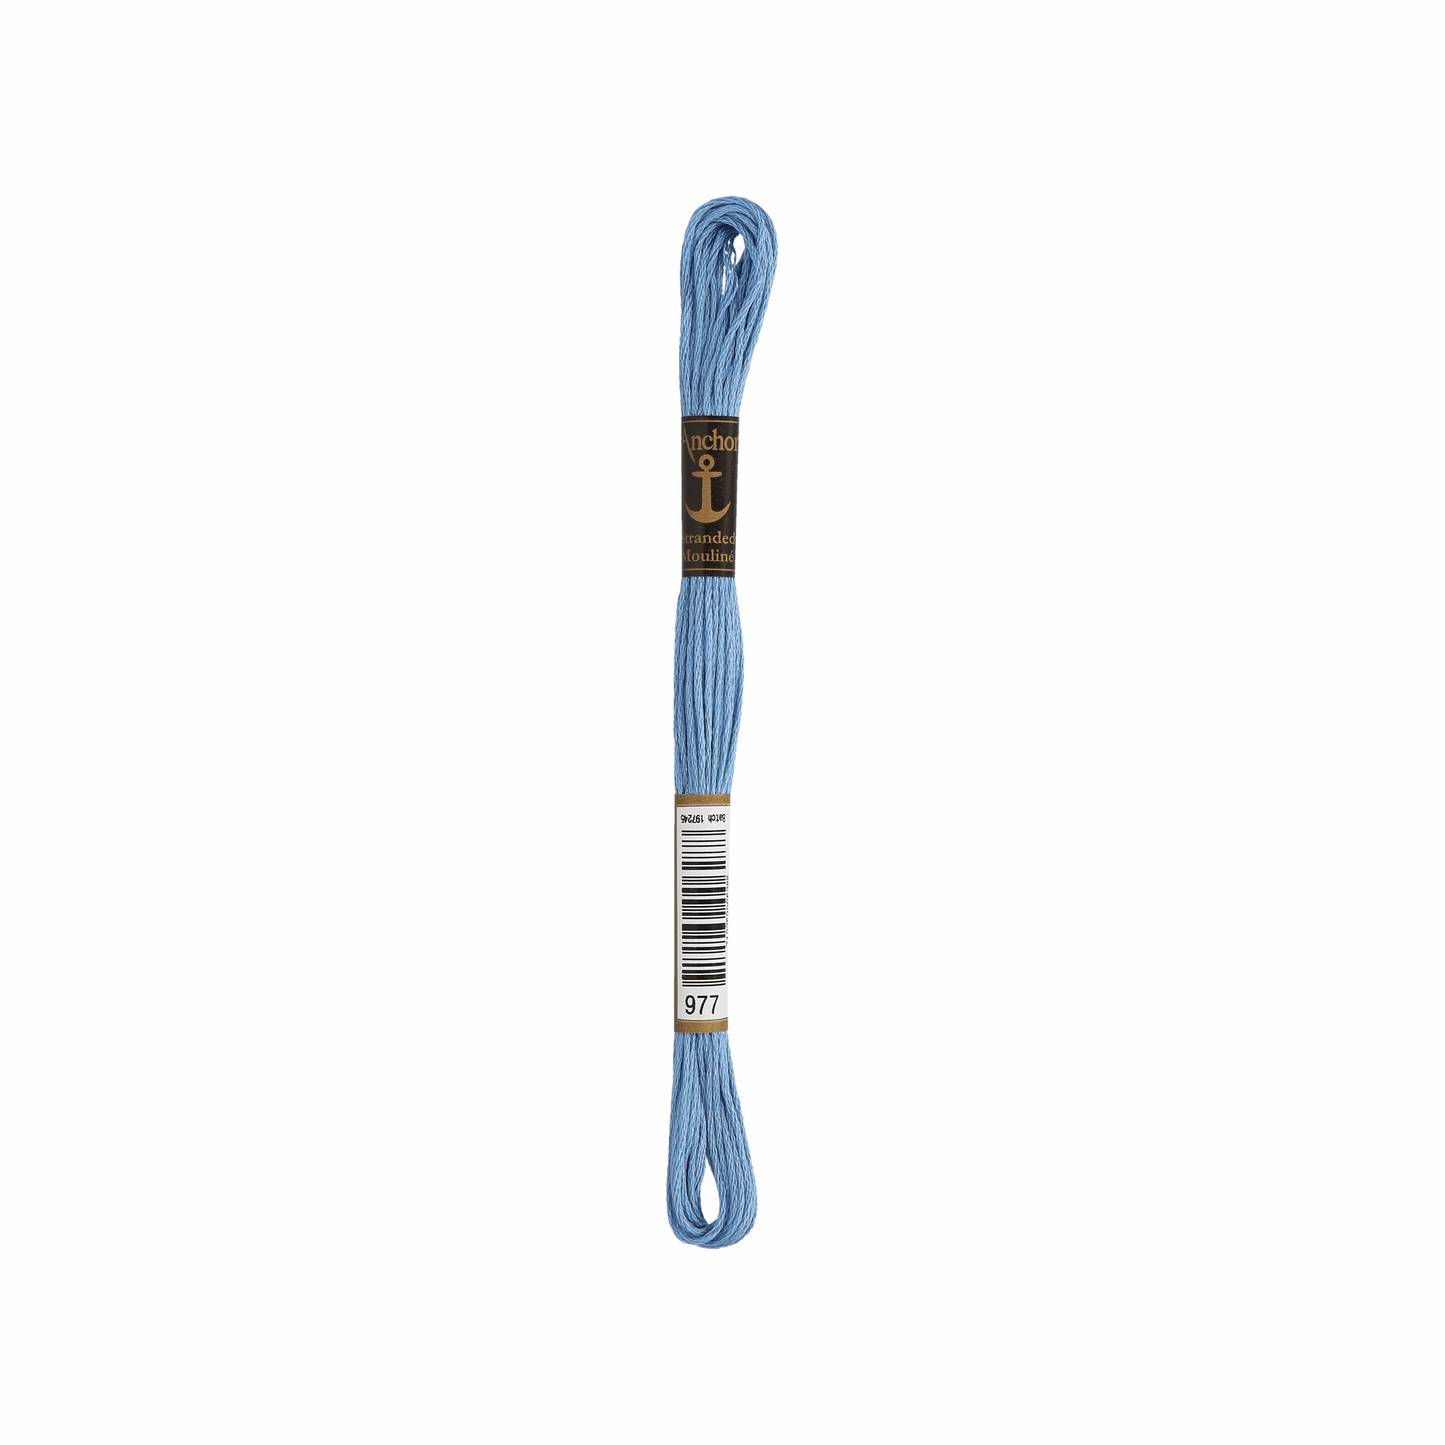 Anchor Sticktwist, 2g, Farbe 977 porzelanblau